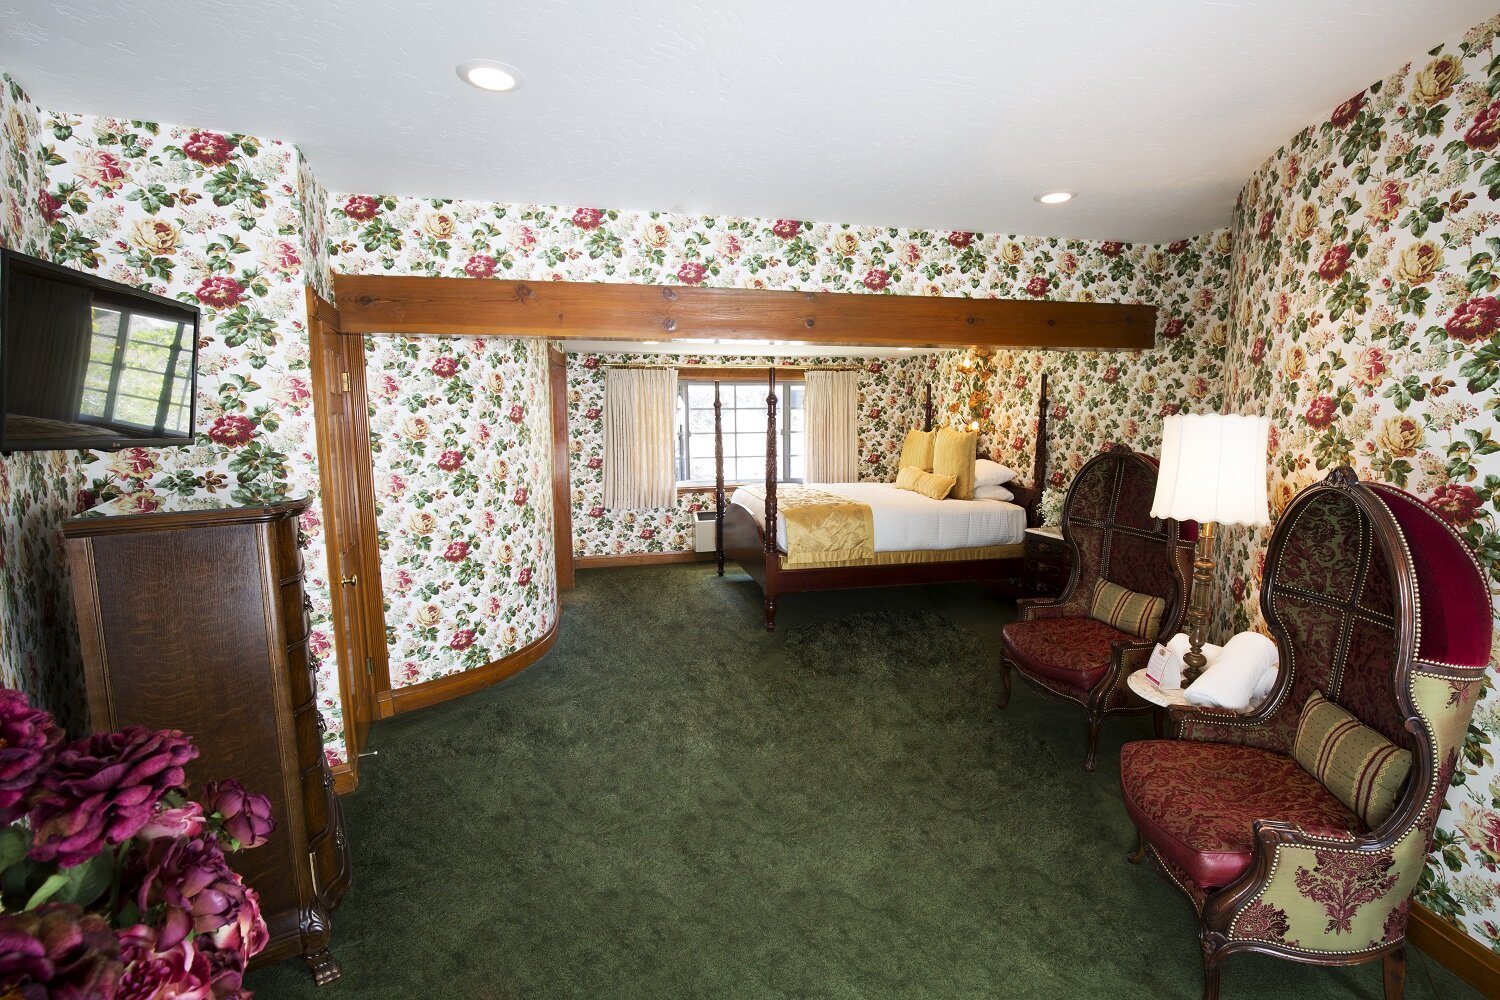 163-Old Fashioned Room.jpg